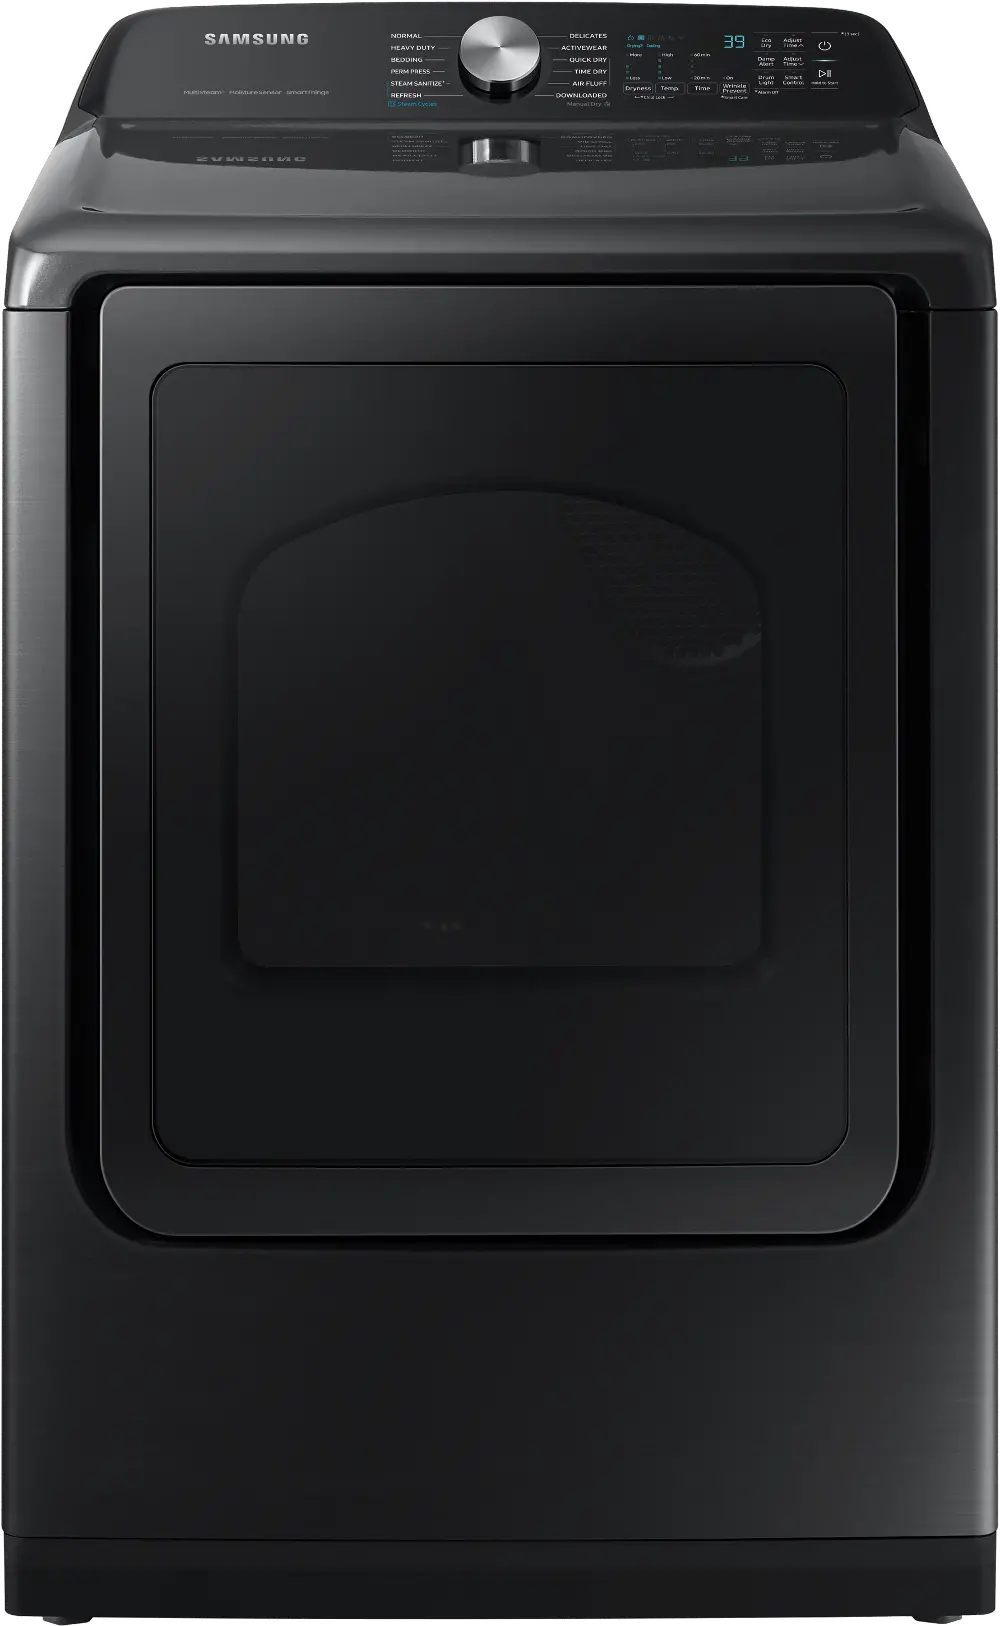 DVG52A5500V Samsung Large Capacity Gas Dryer with Sensor Dry - Brushed Black-1